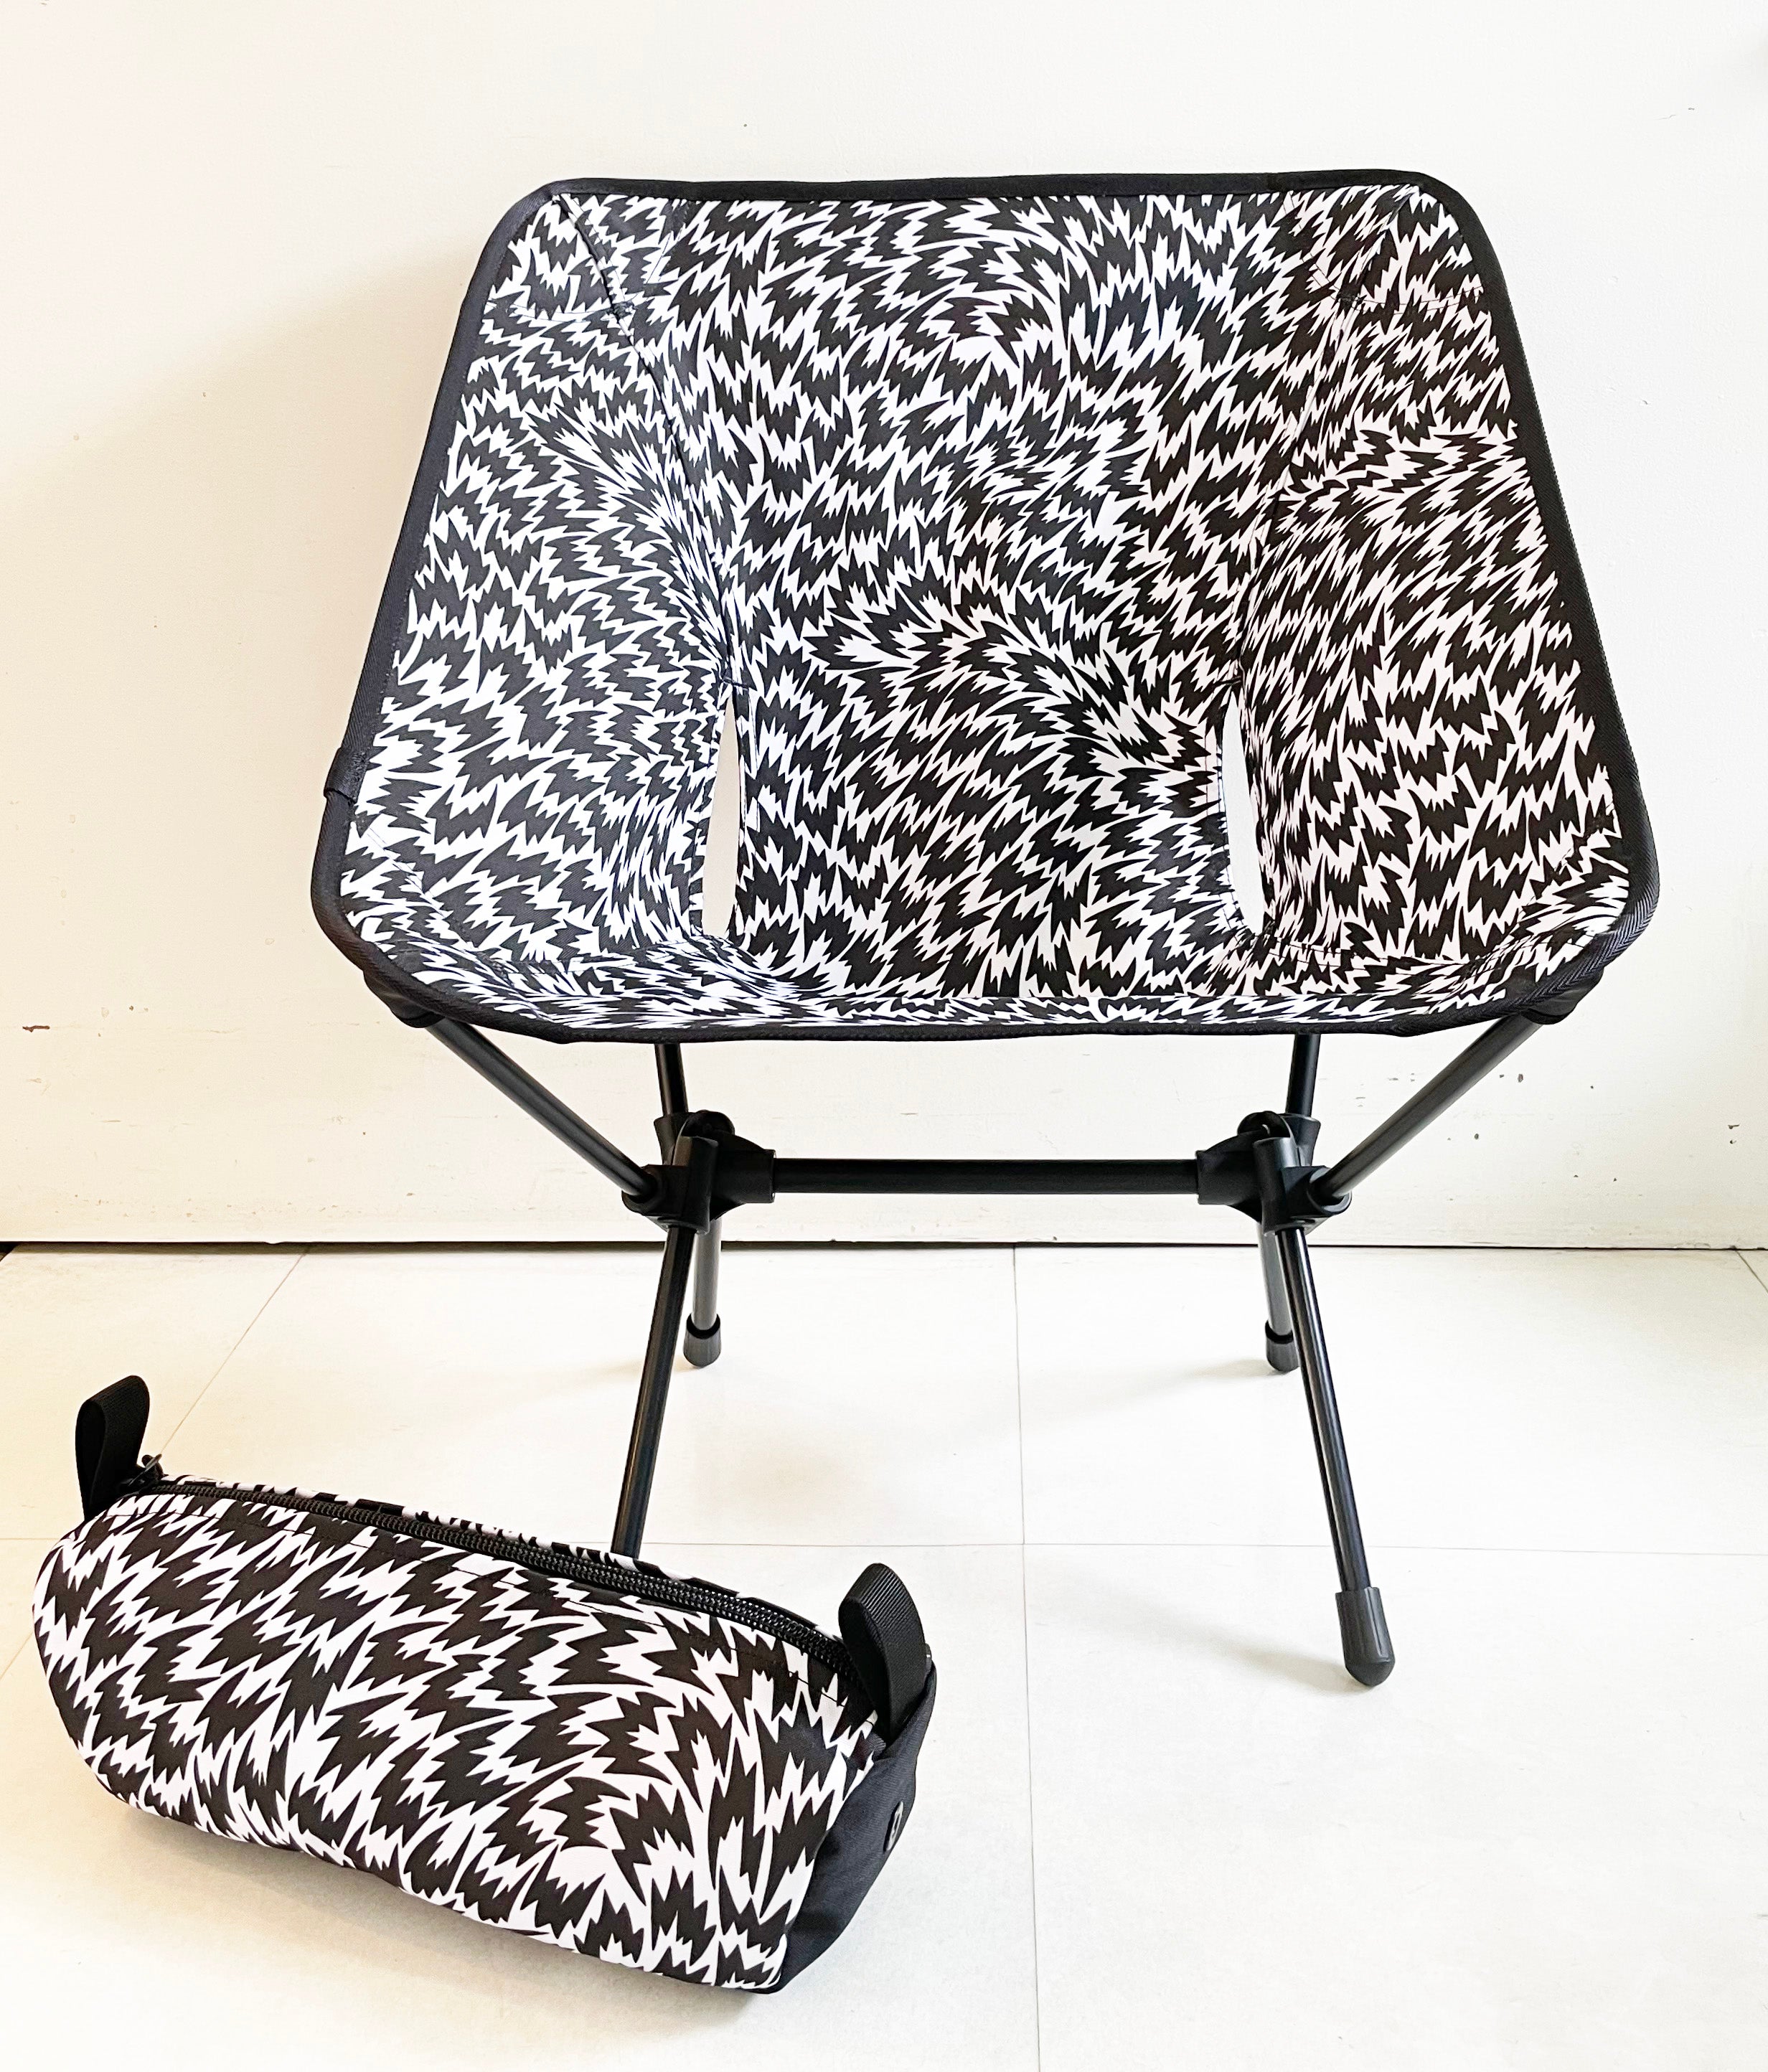 ELEY KISHIMOTO × Helinox -Tactical Chair- 